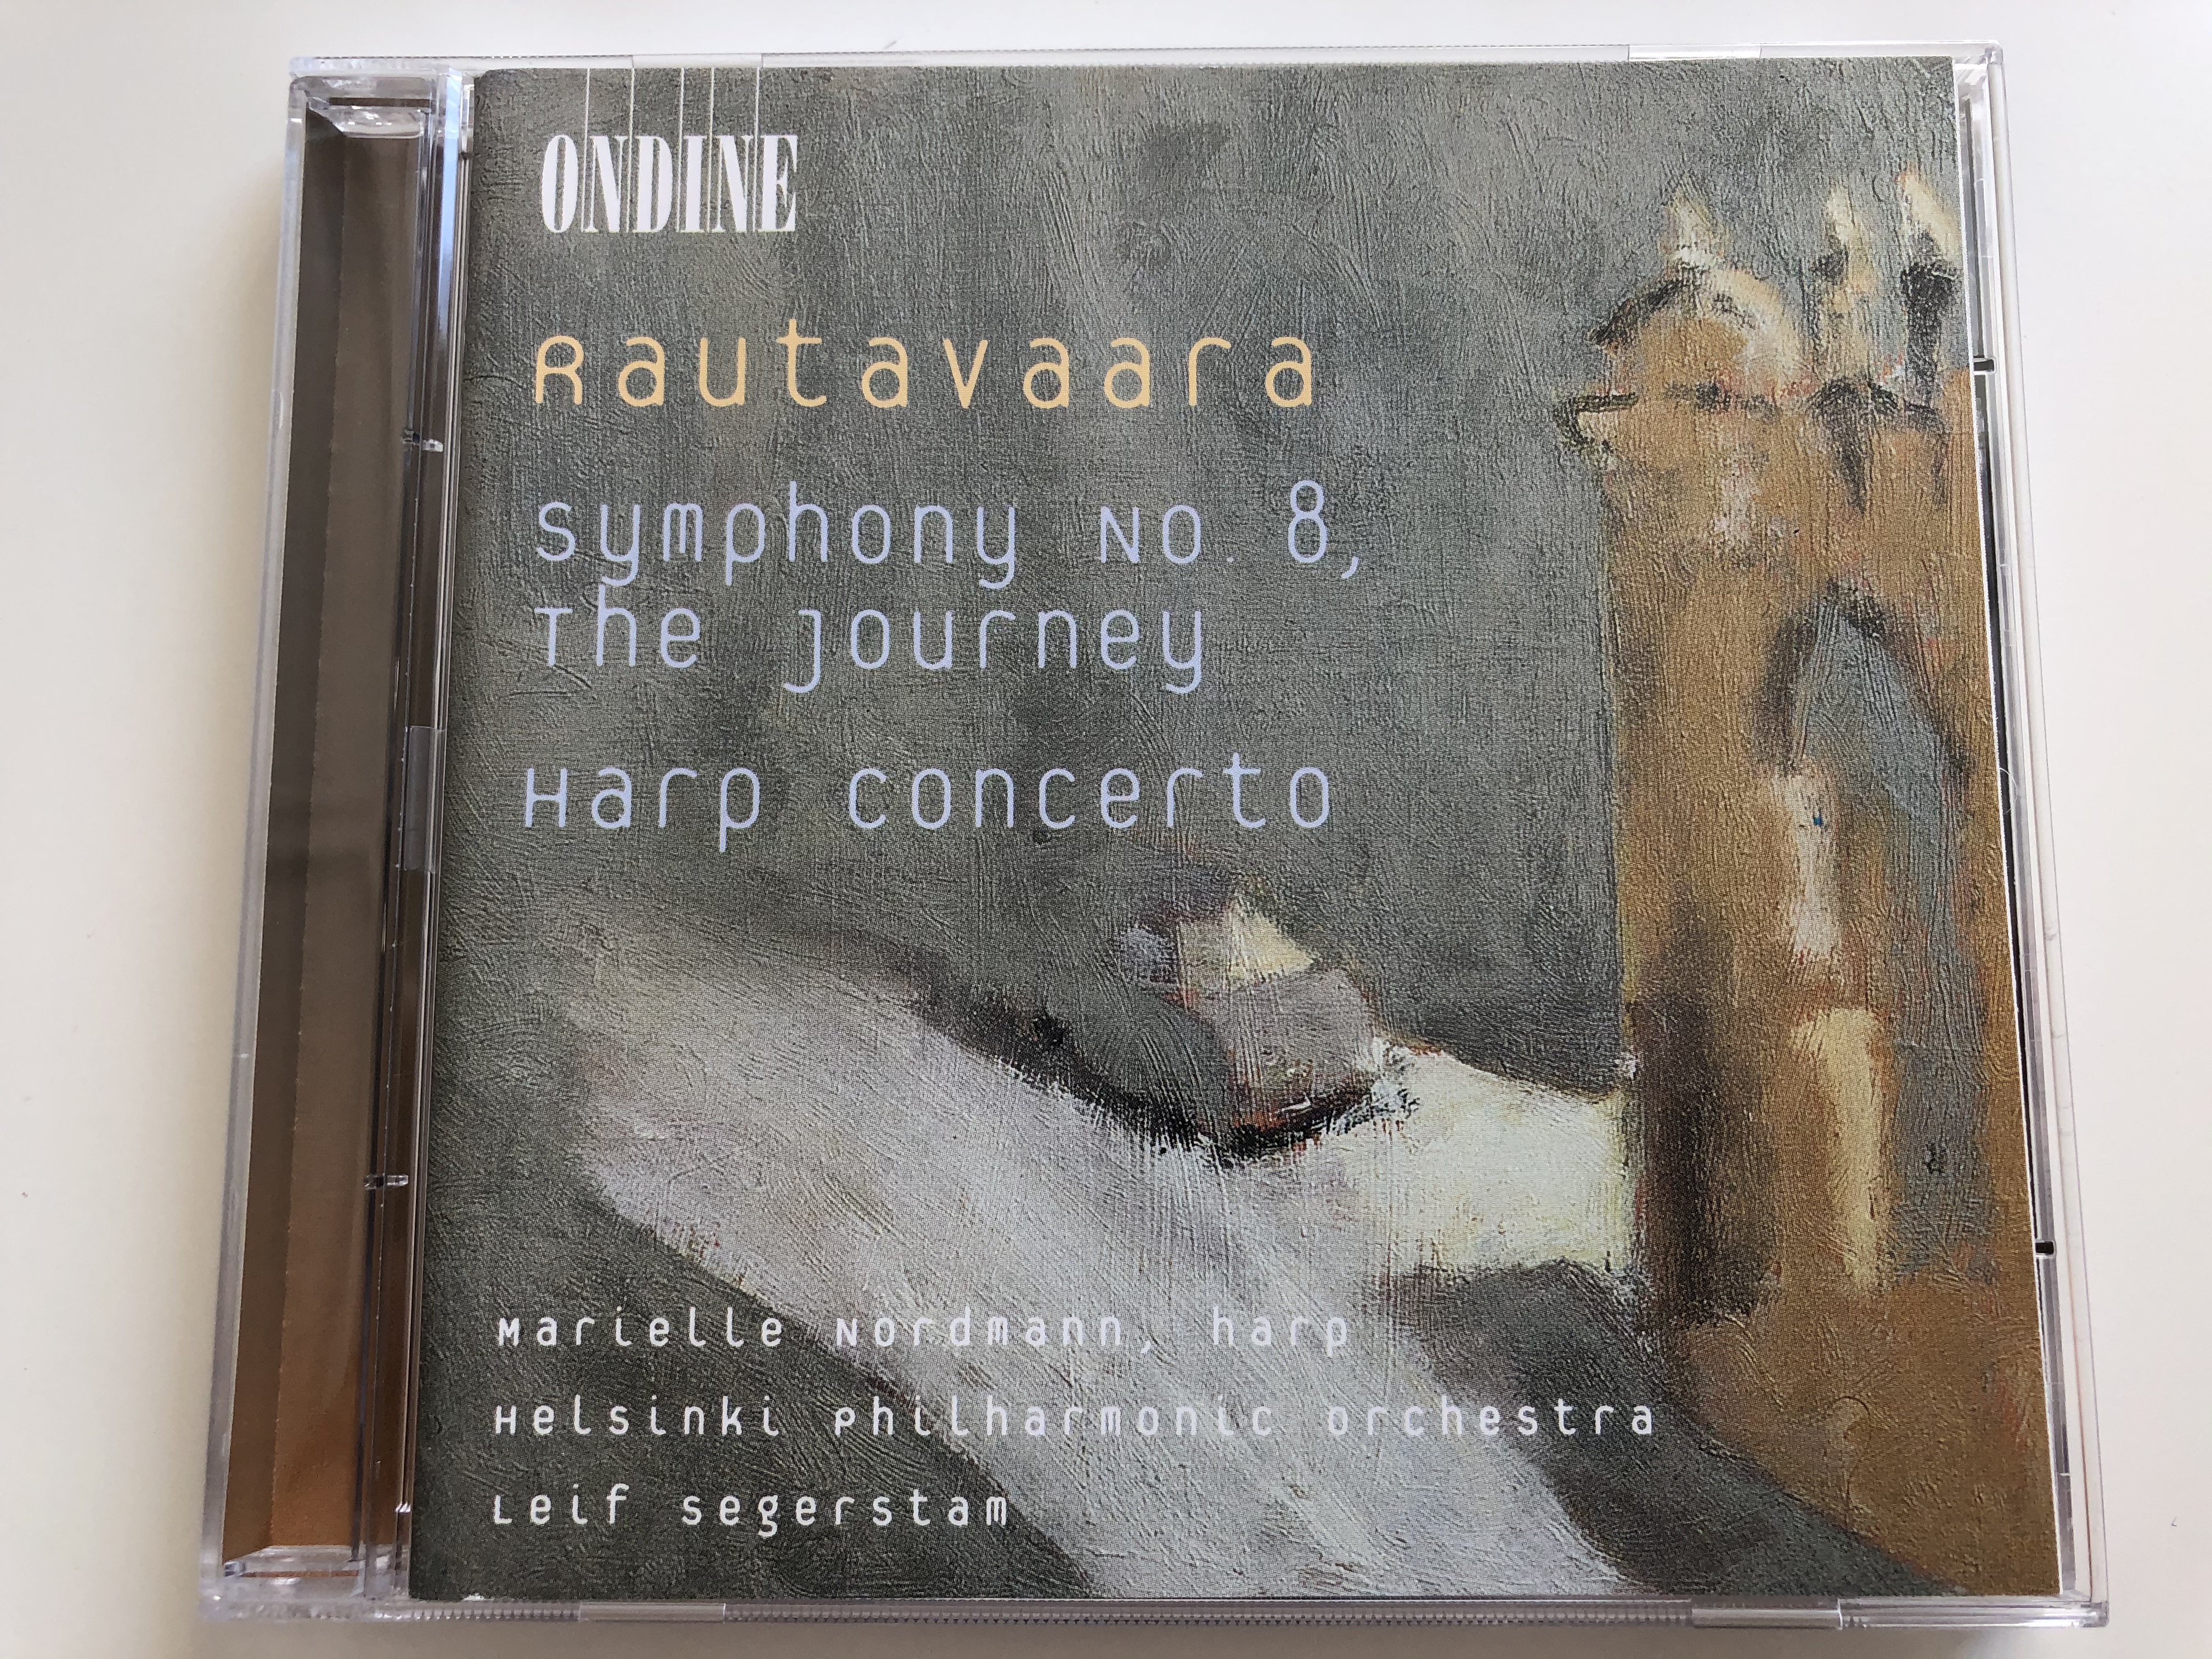 rautavaara-symphony-no.-8-the-journey-harp-concerto-harp-marielle-nordmann-helsinki-philharmonic-orchestra-leif-segerstam-ondine-audio-cd-2001-ode-978-2-1-.jpg